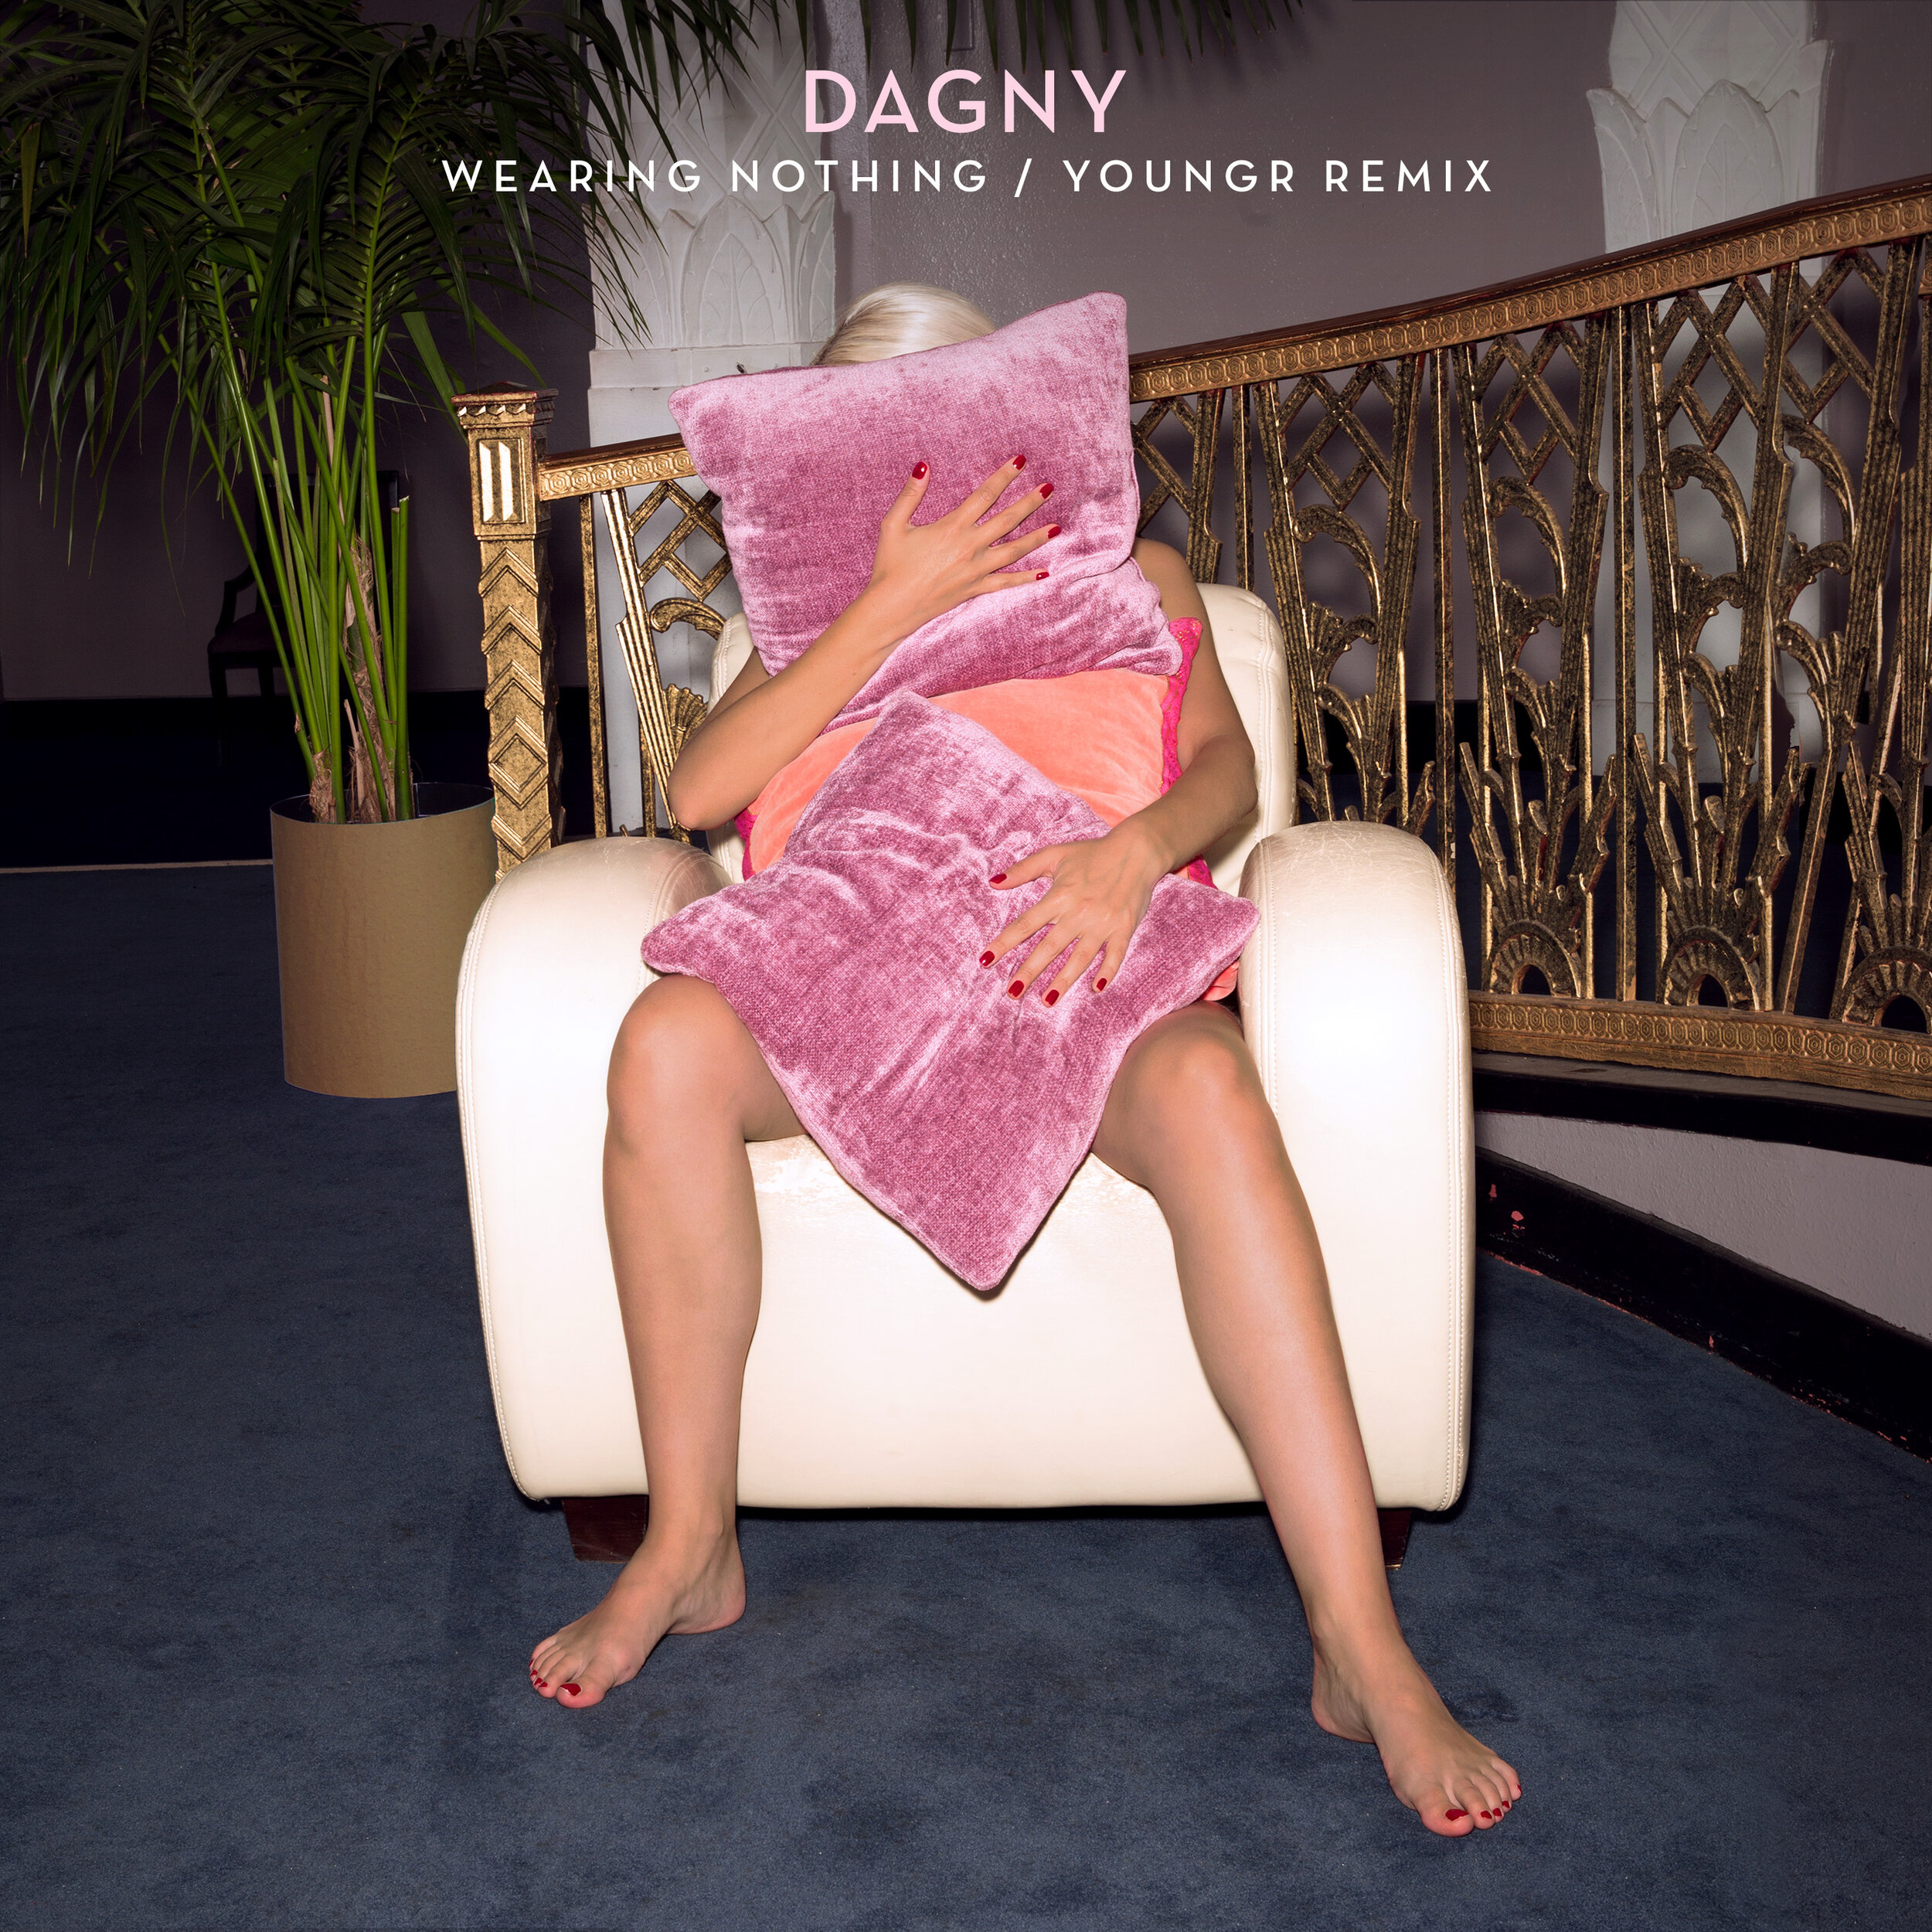 Dagny - Wearing Nothing remix